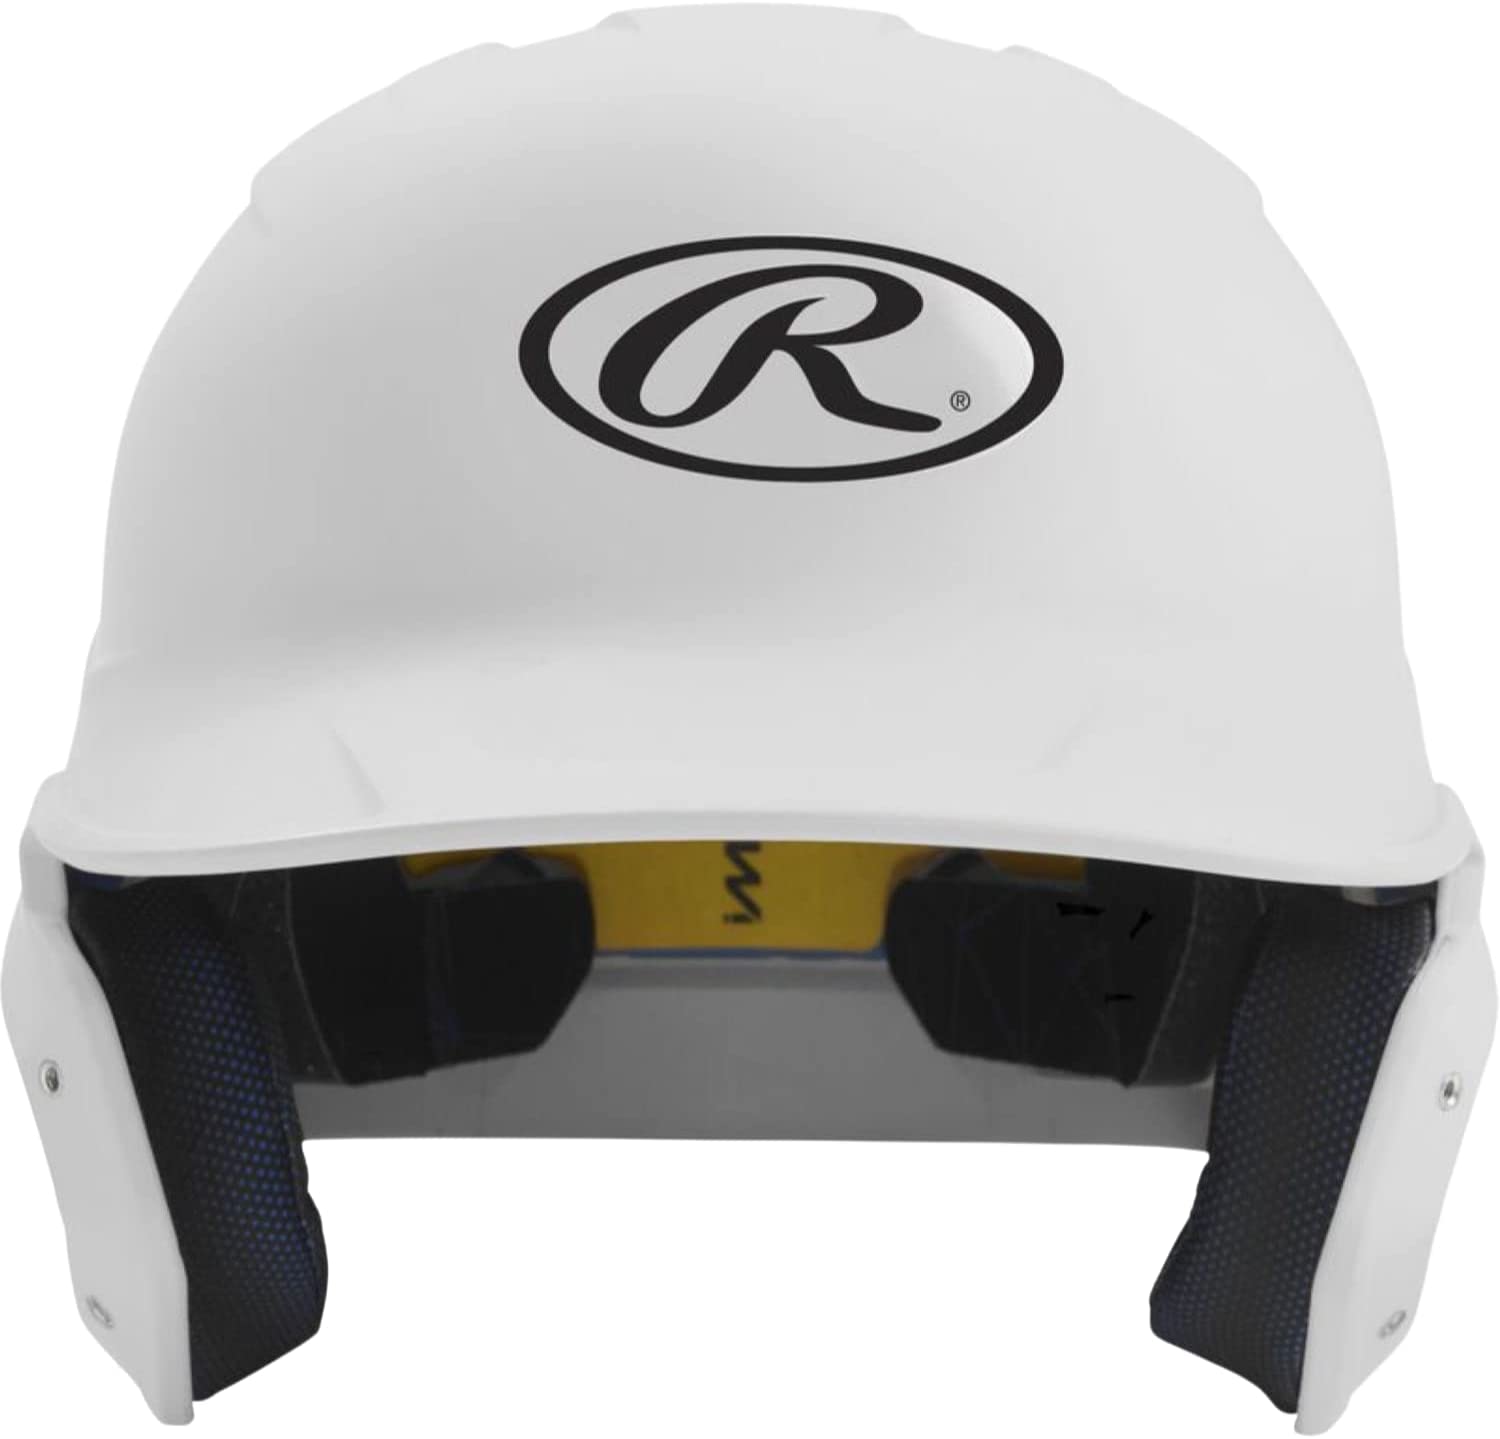 Don Mattingly New York Yankees Autographed Rawlings Mach Pro White Alternate Chrome Replica Batting Helmet - Fanatics Exclusive